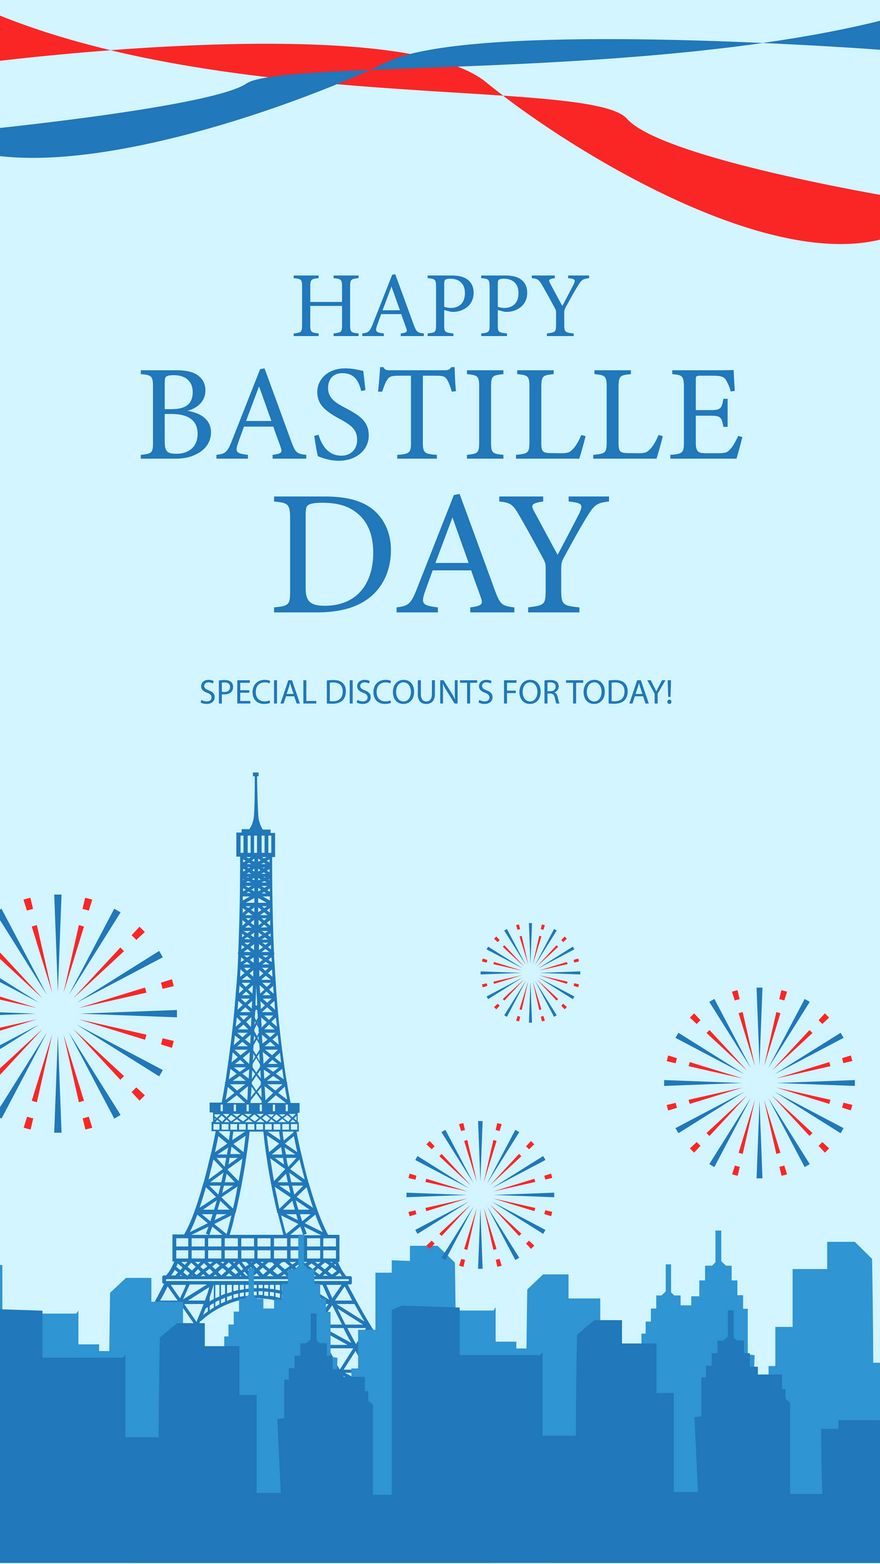 Free Bastille Day Invitation Background